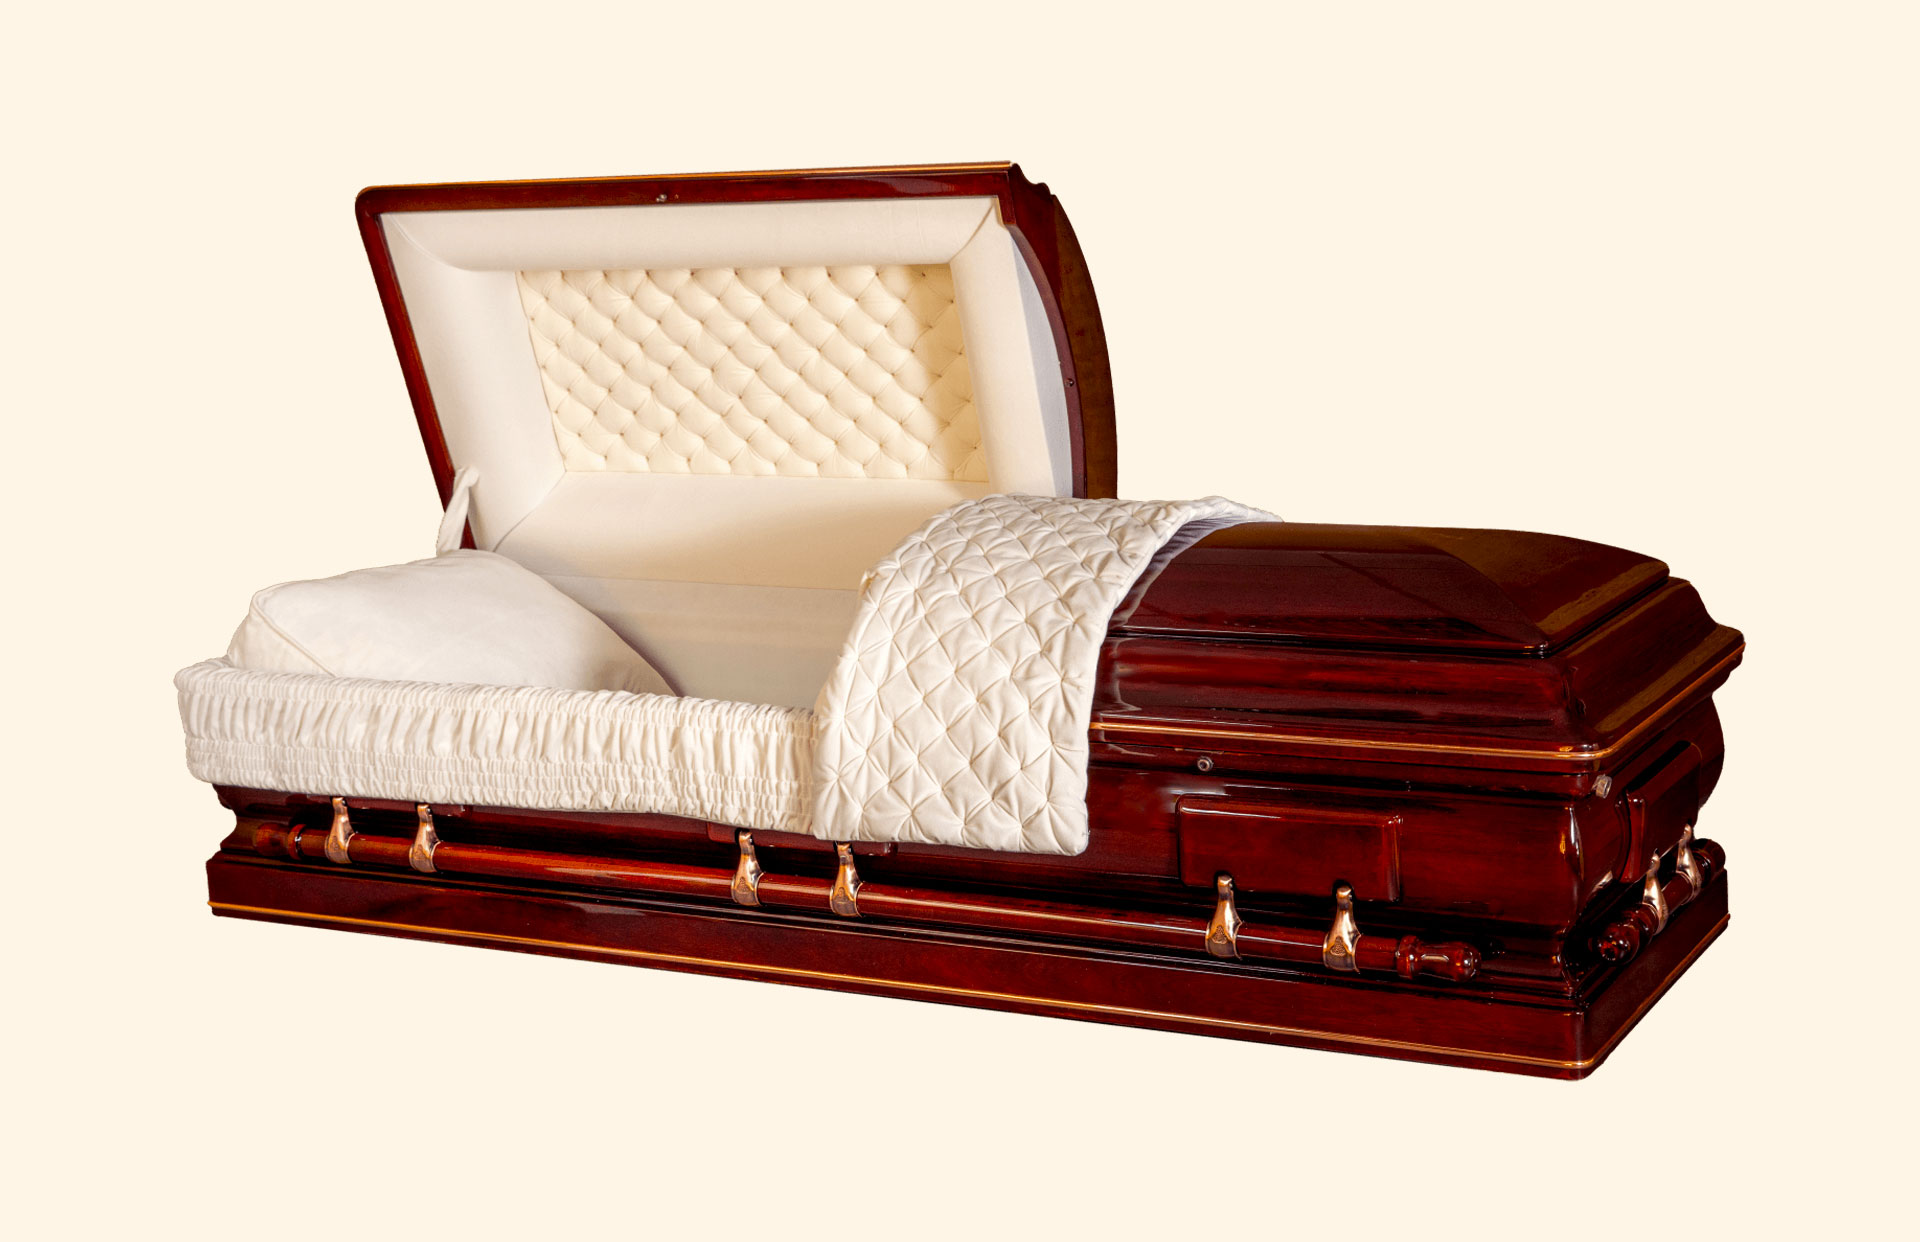 Royal American casket standard interior